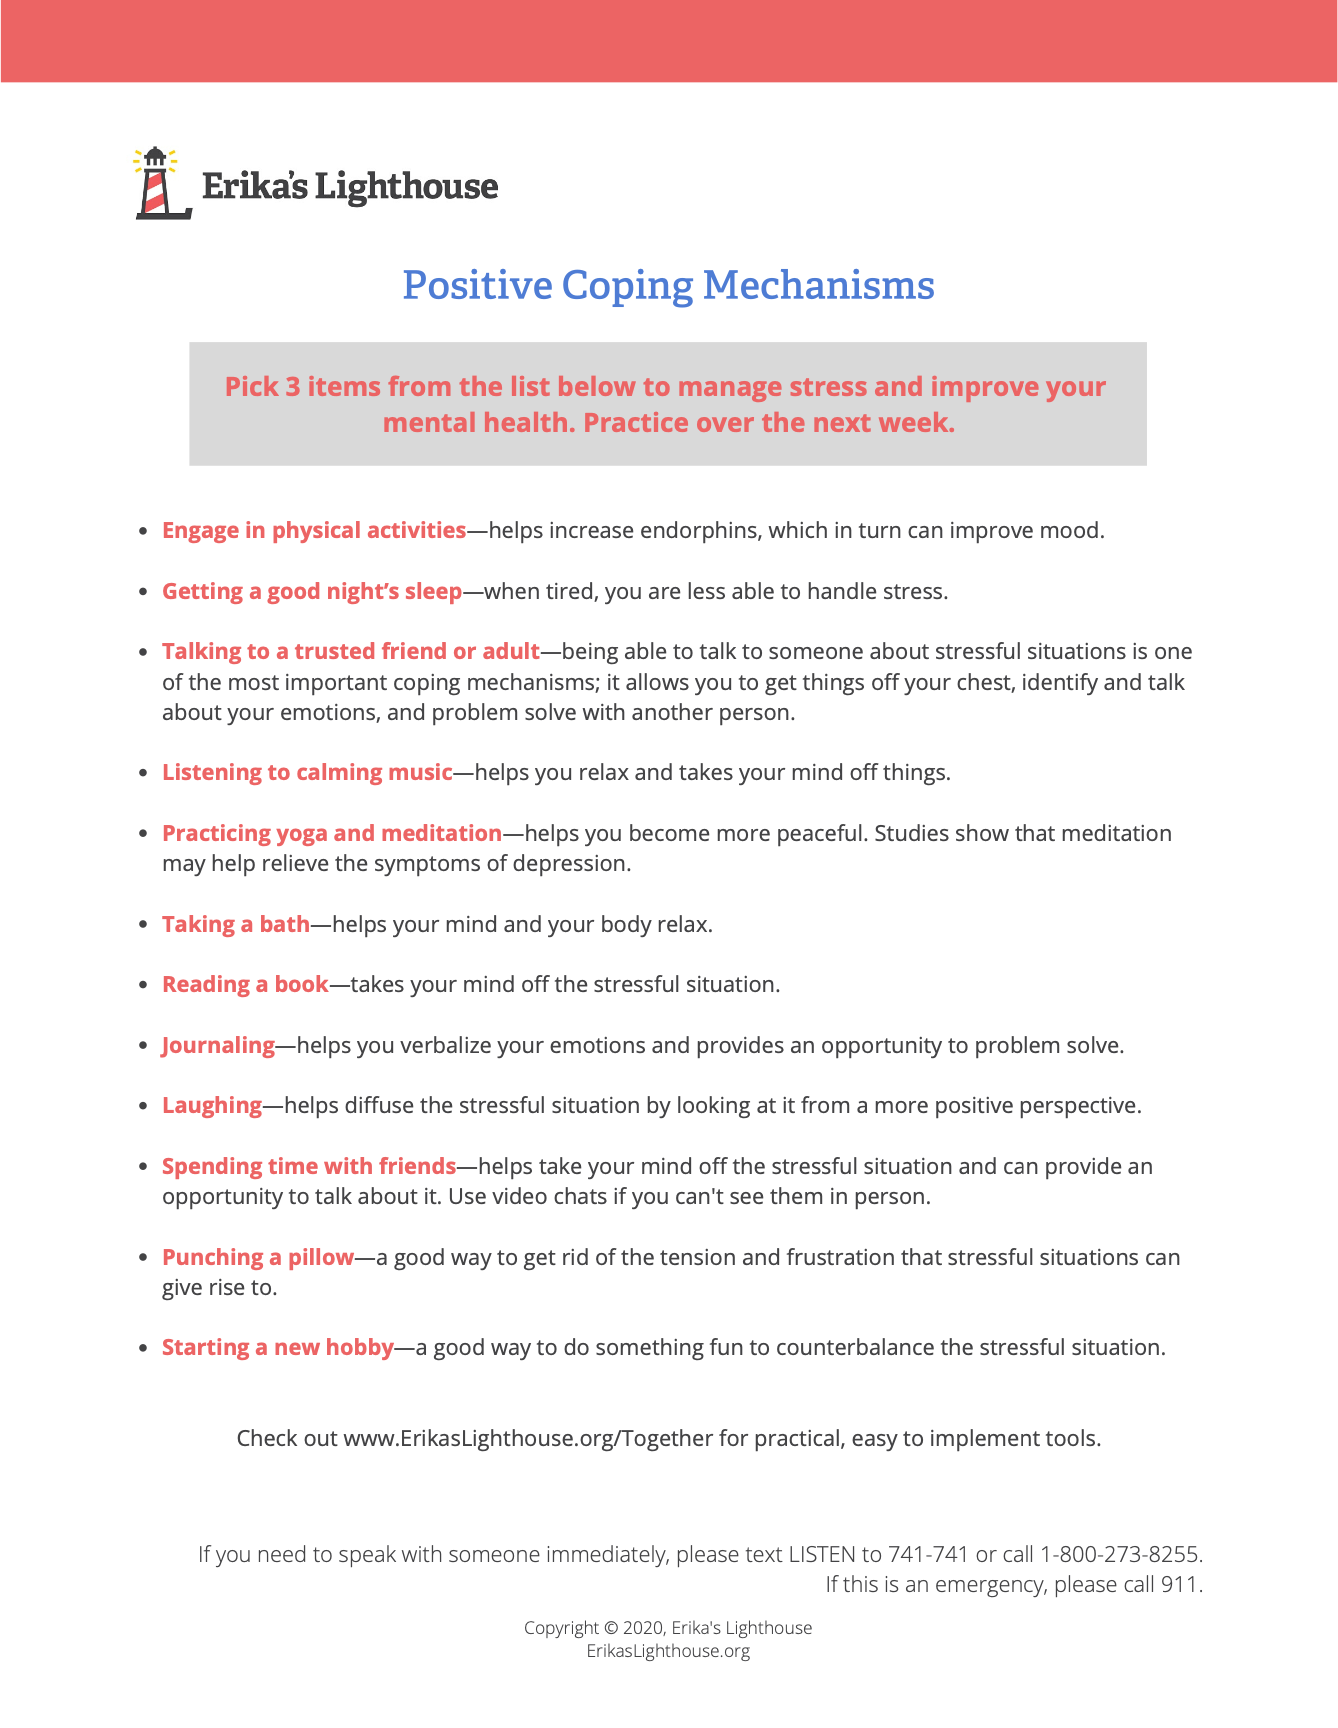 Positive coping mechanisms 